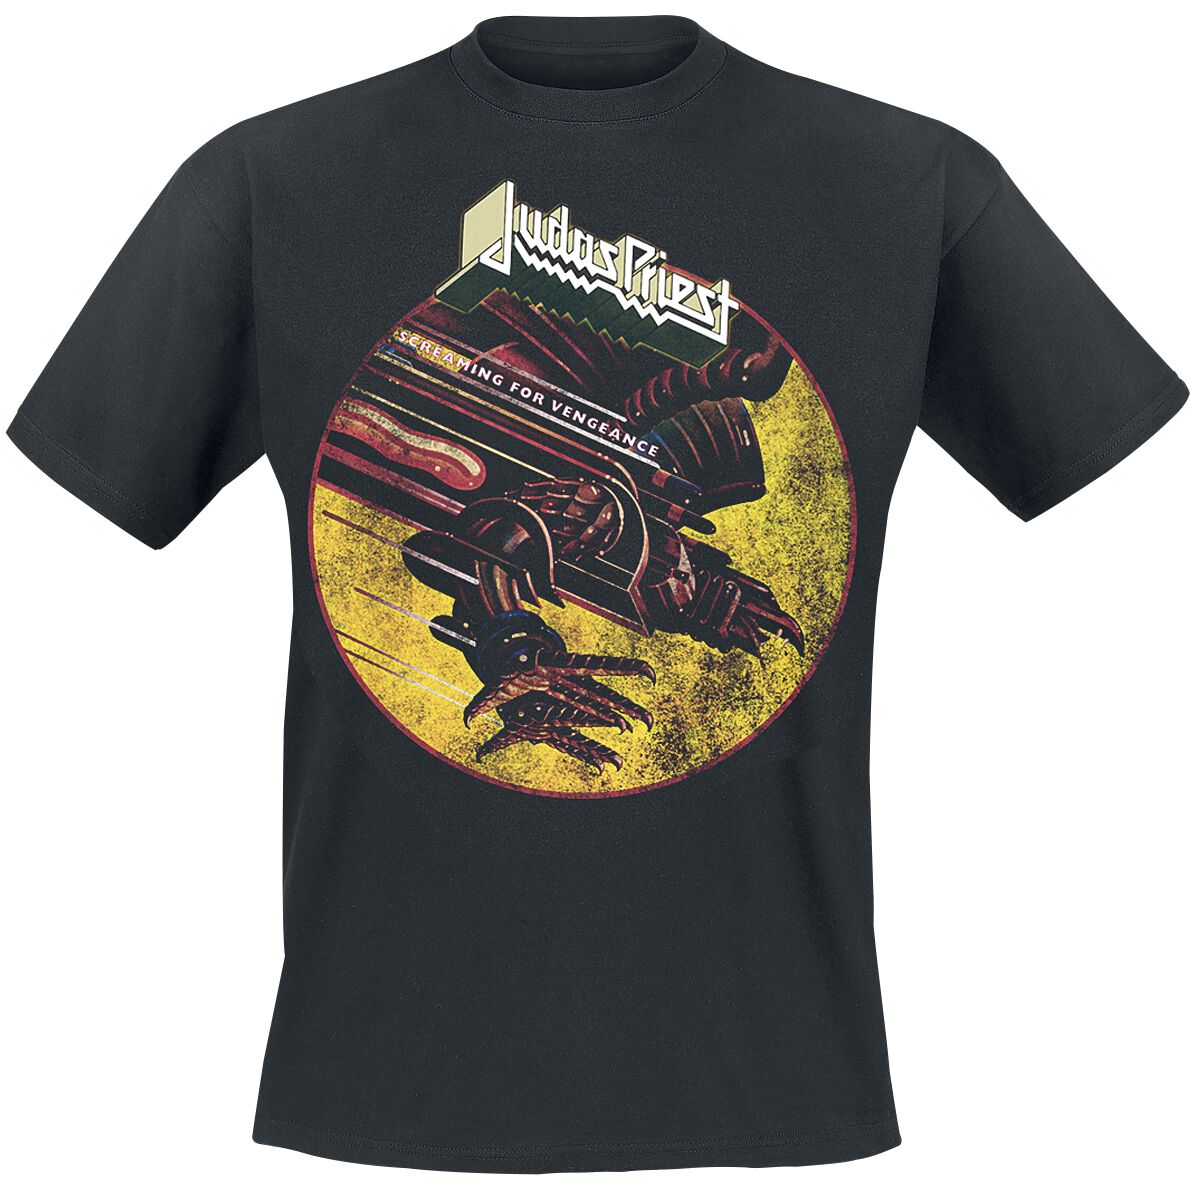 Judas Priest SFV Distressed T-Shirt schwarz in XL